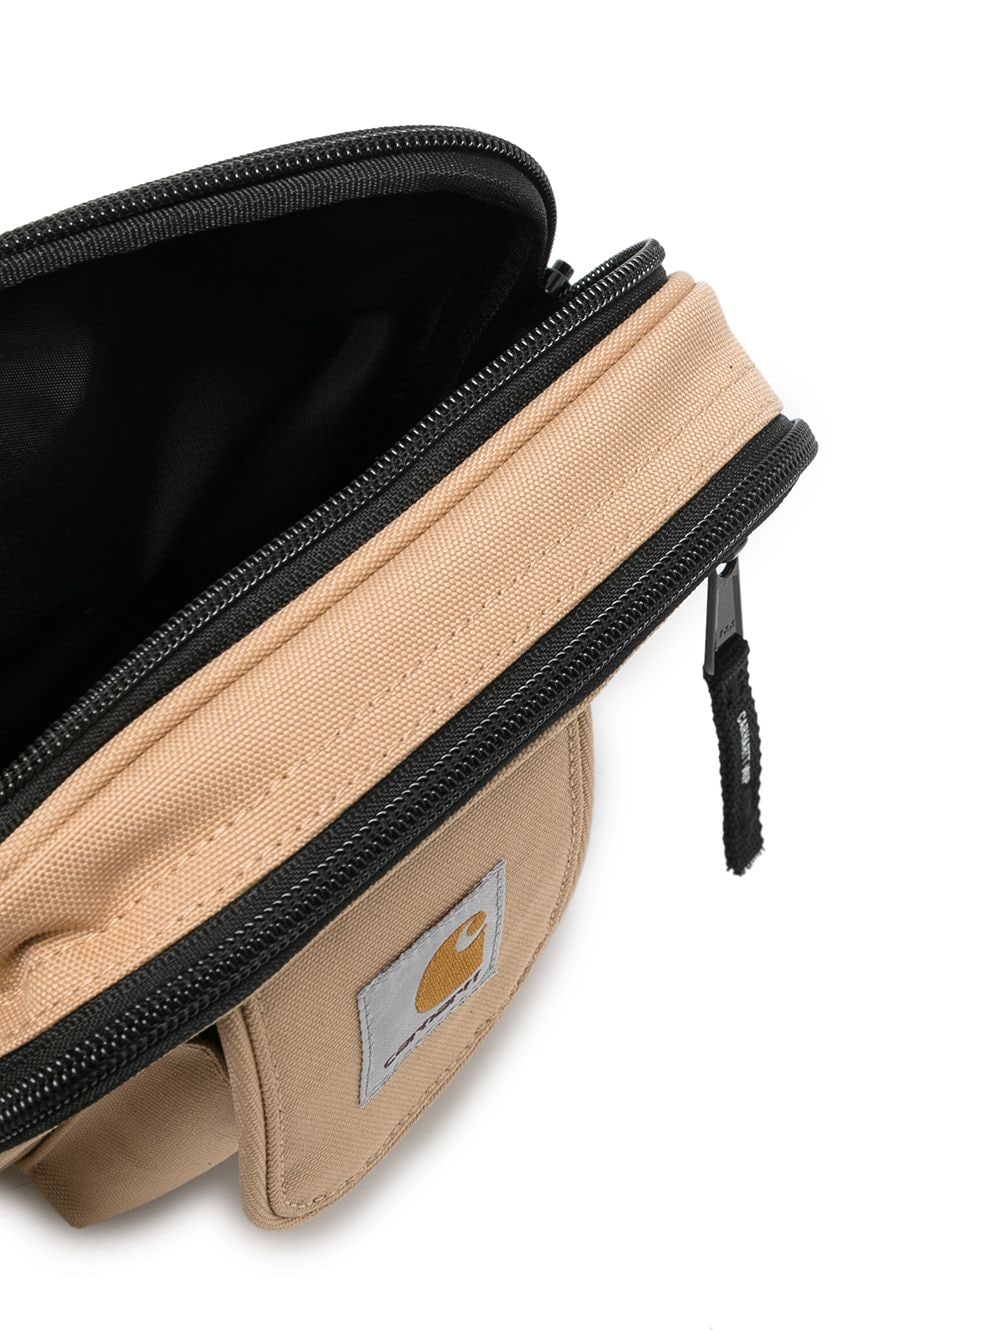 Carhartt WIP Essentials Small Messenger Bag - Farfetch